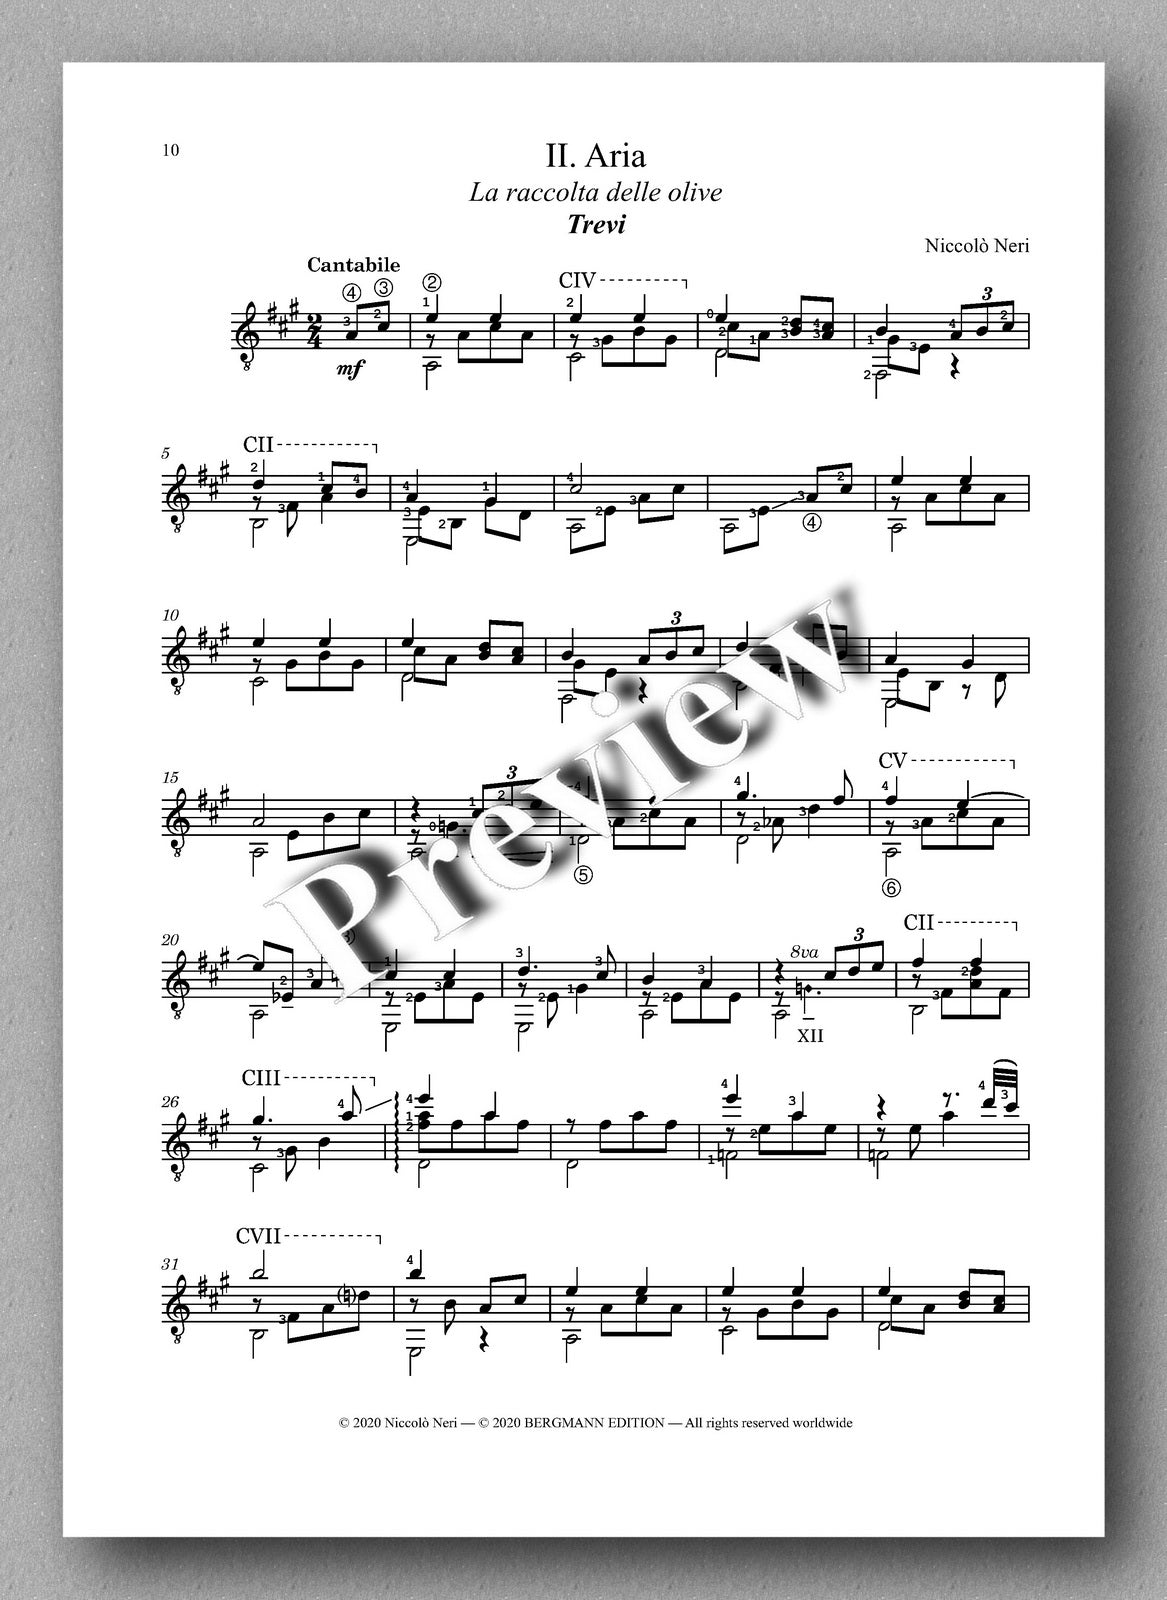 Niccolò Neri, Suite Popolare Umbra - preview of the music score 2